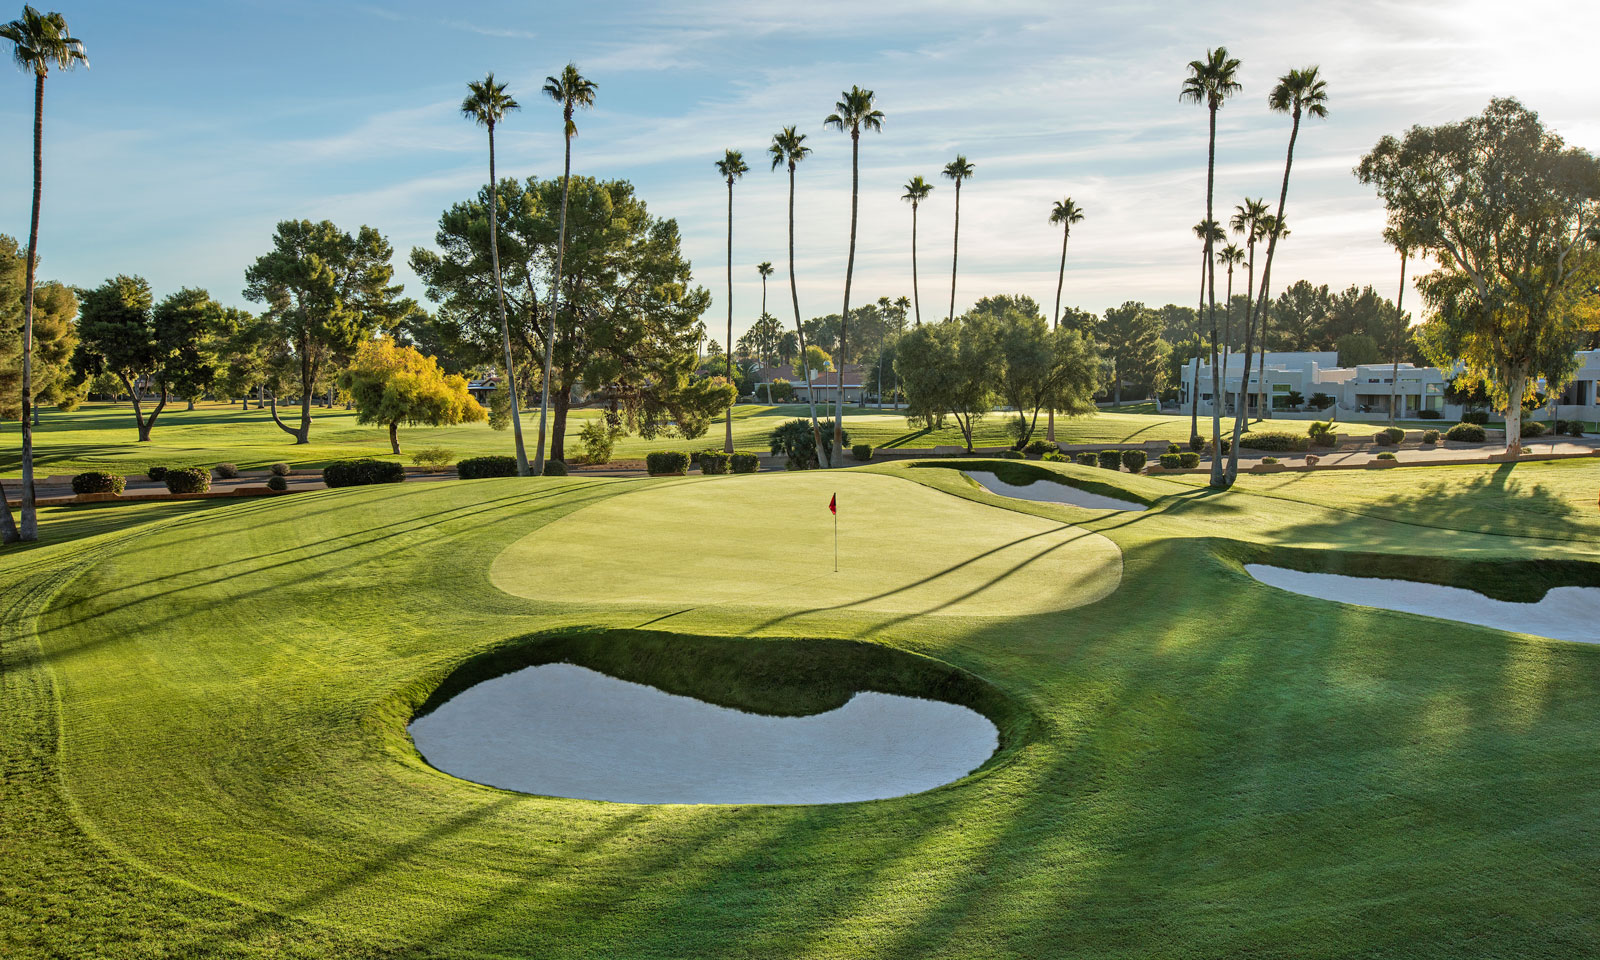 The-12th-Green-at-Arizonas-Wigwam-Golf-Course